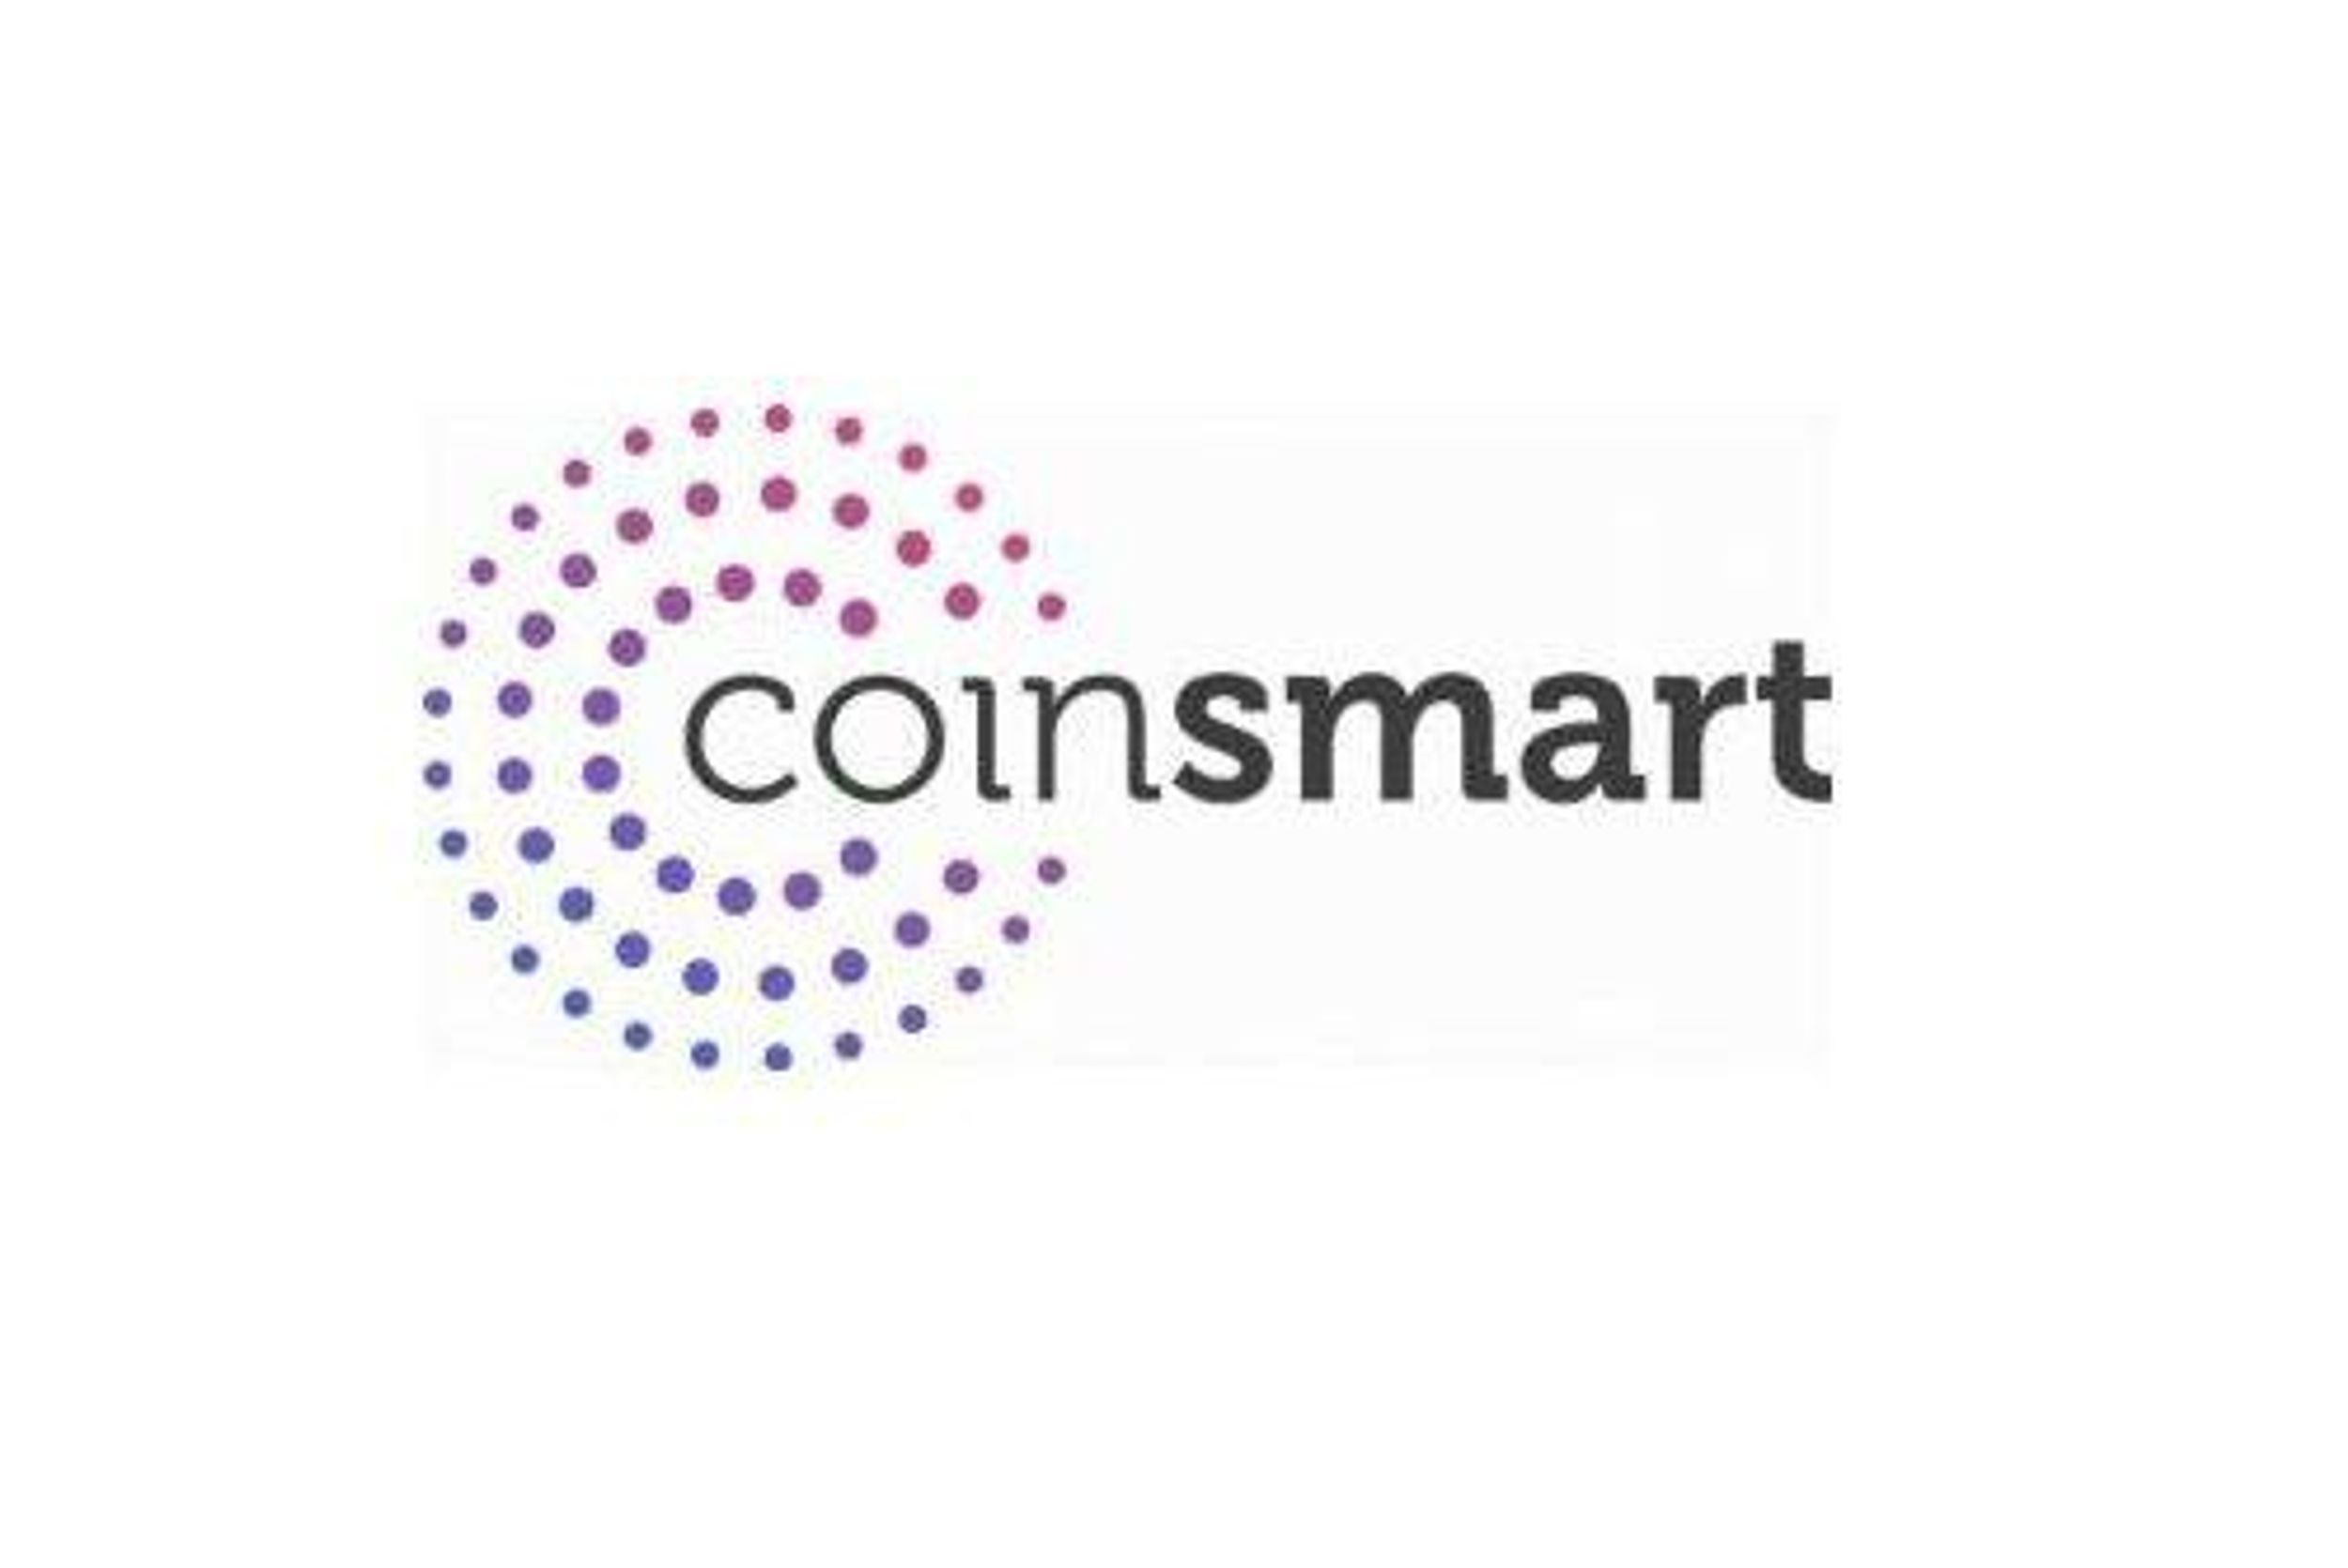 CoinSmart Announces Increase in Key Performance Metrics